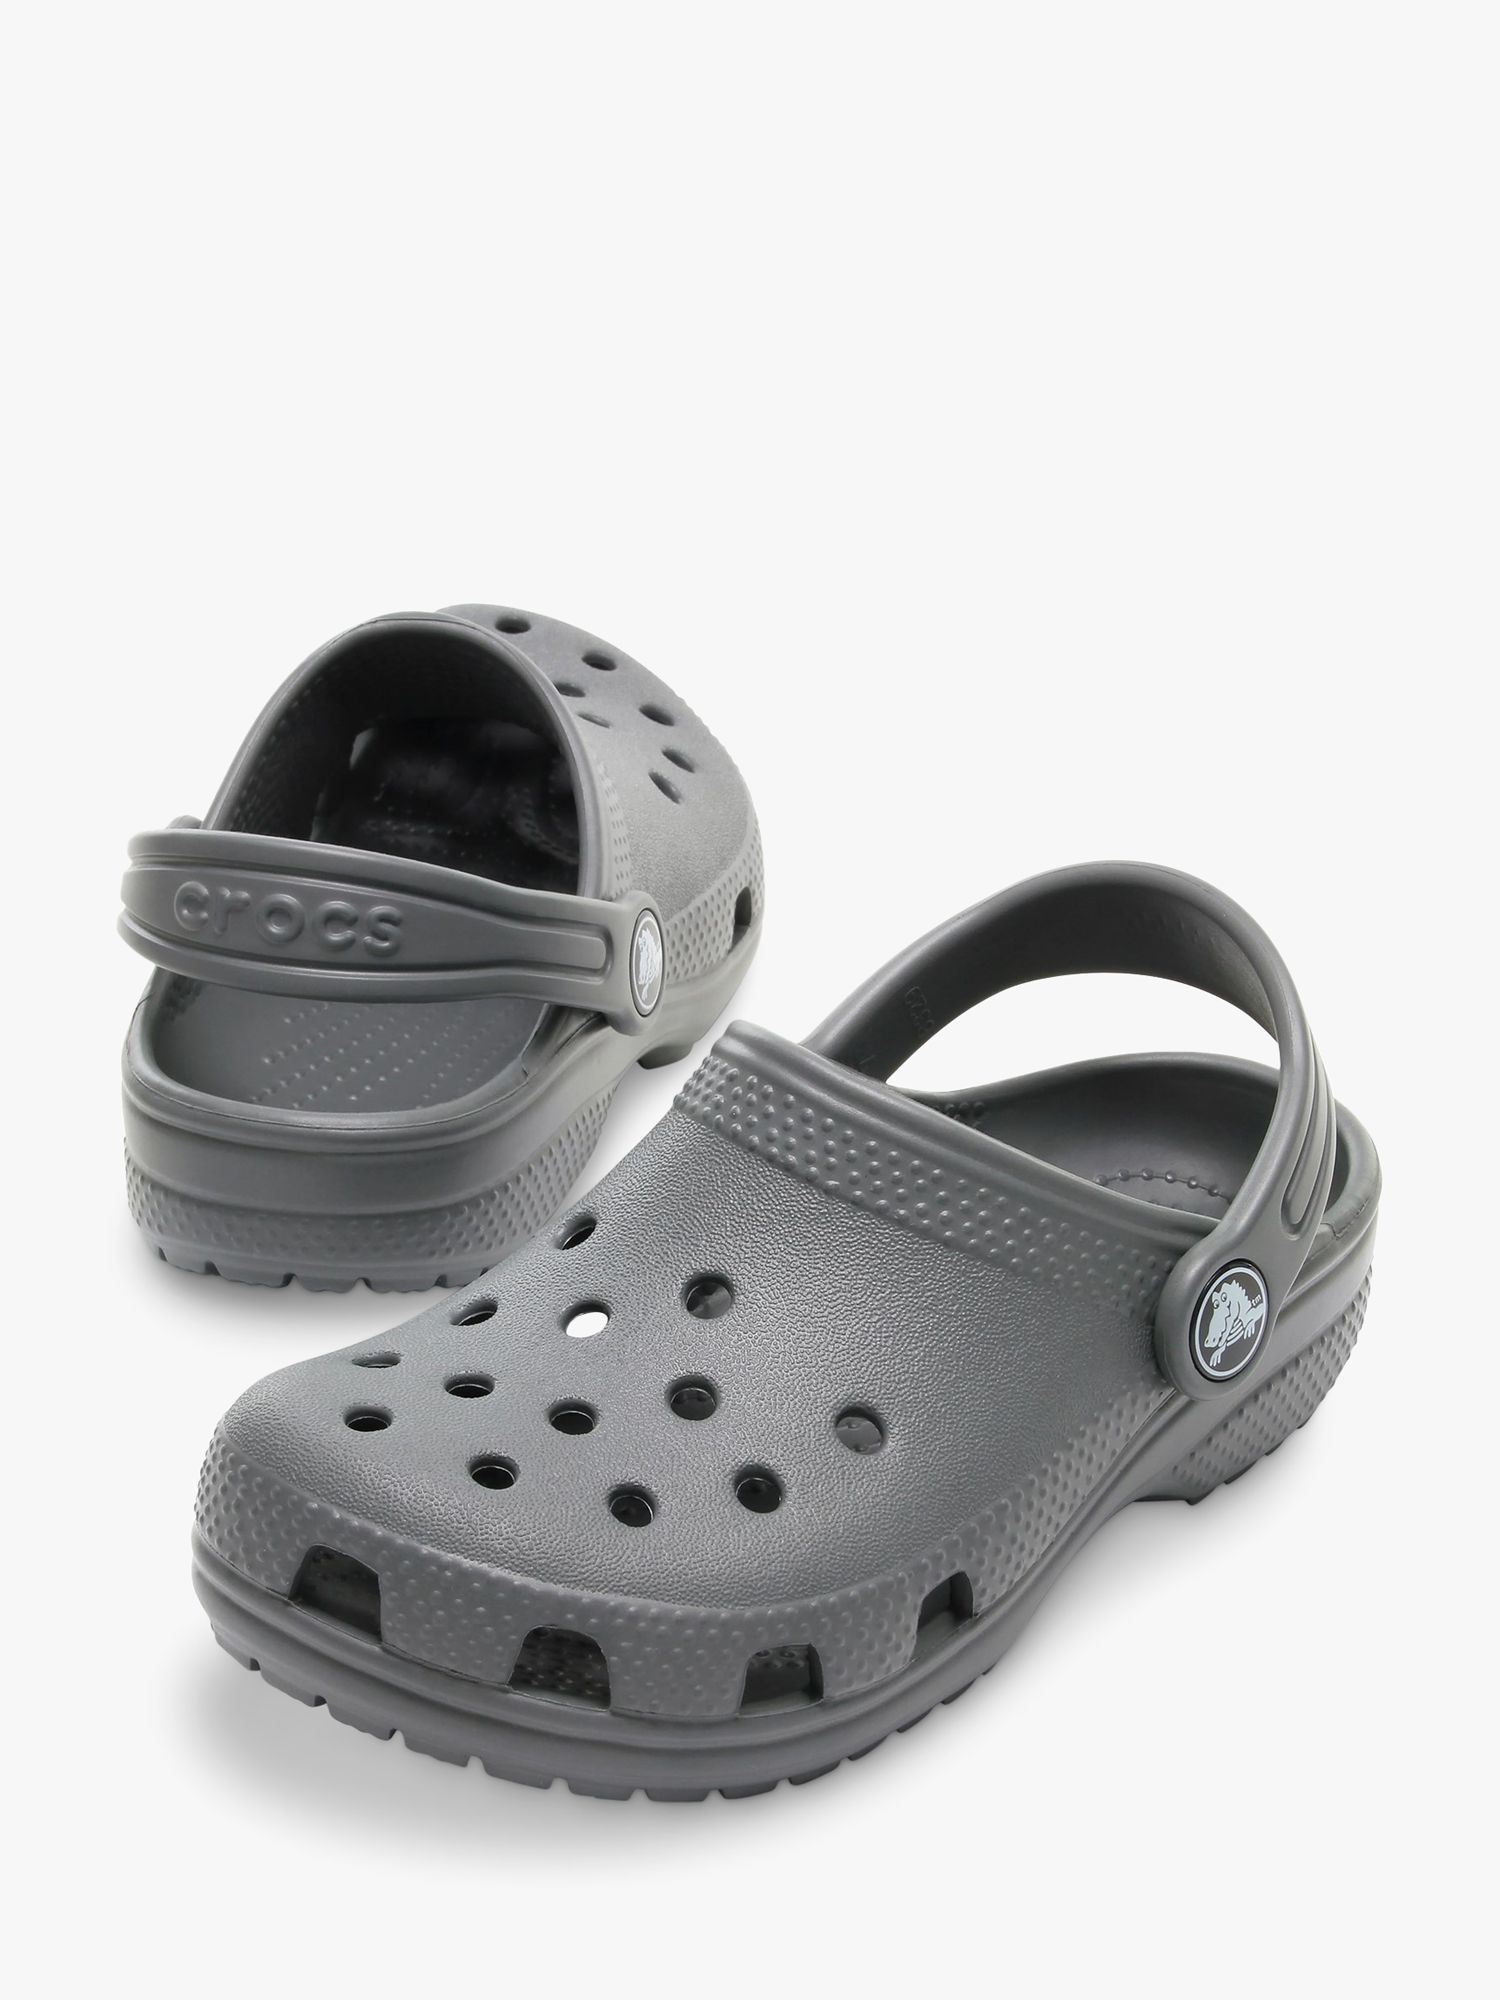 Crocs Kids' Classic Croc Clogs, Grey, 1